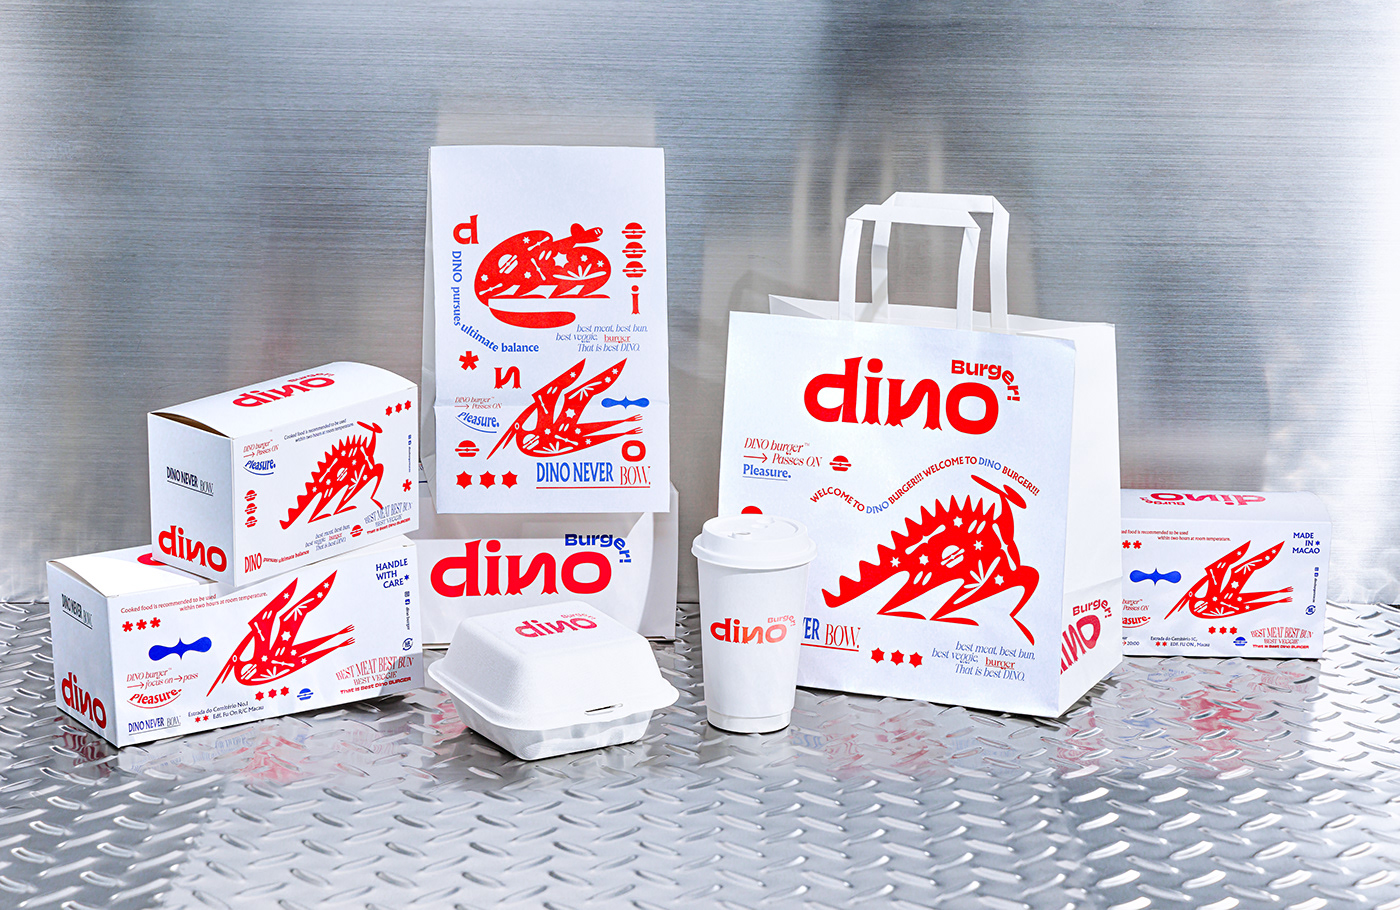 AU CHON HIN brand identity branding  Dino burger graphic design  Macao Macao brand macau untitled macao